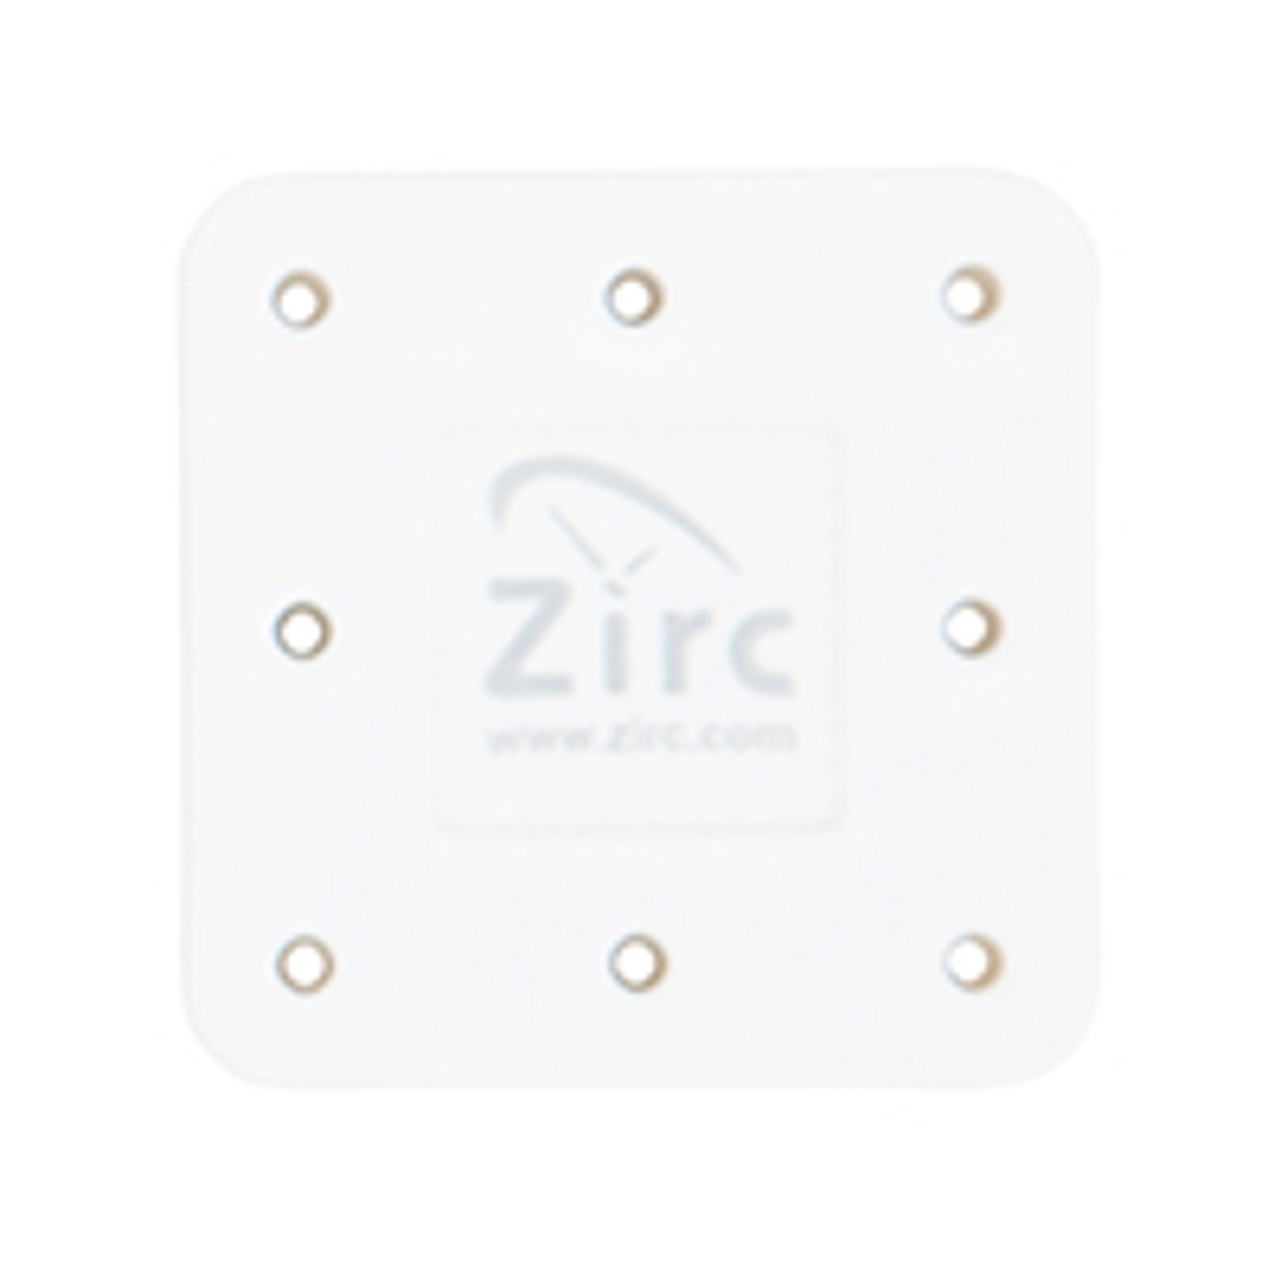 Zirc - Bur Block Magnetic Microban 8 Hole White